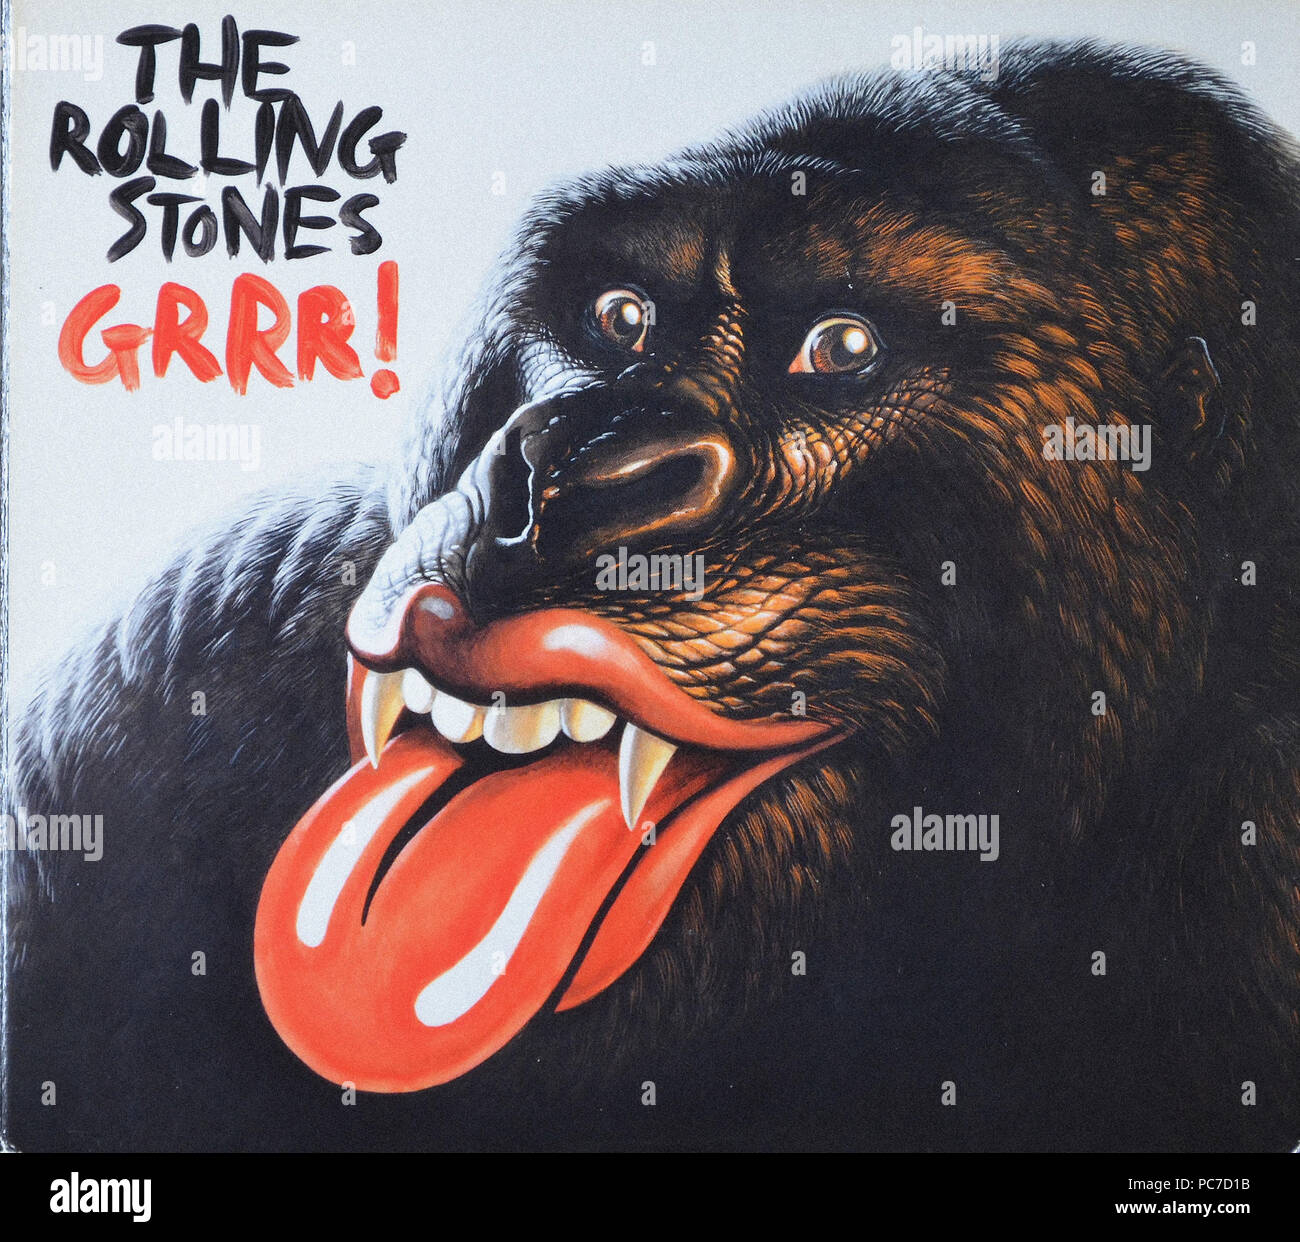 The Rolling Stones   -  Grrr!  -  Vintage vinyl album cover Stock Photo